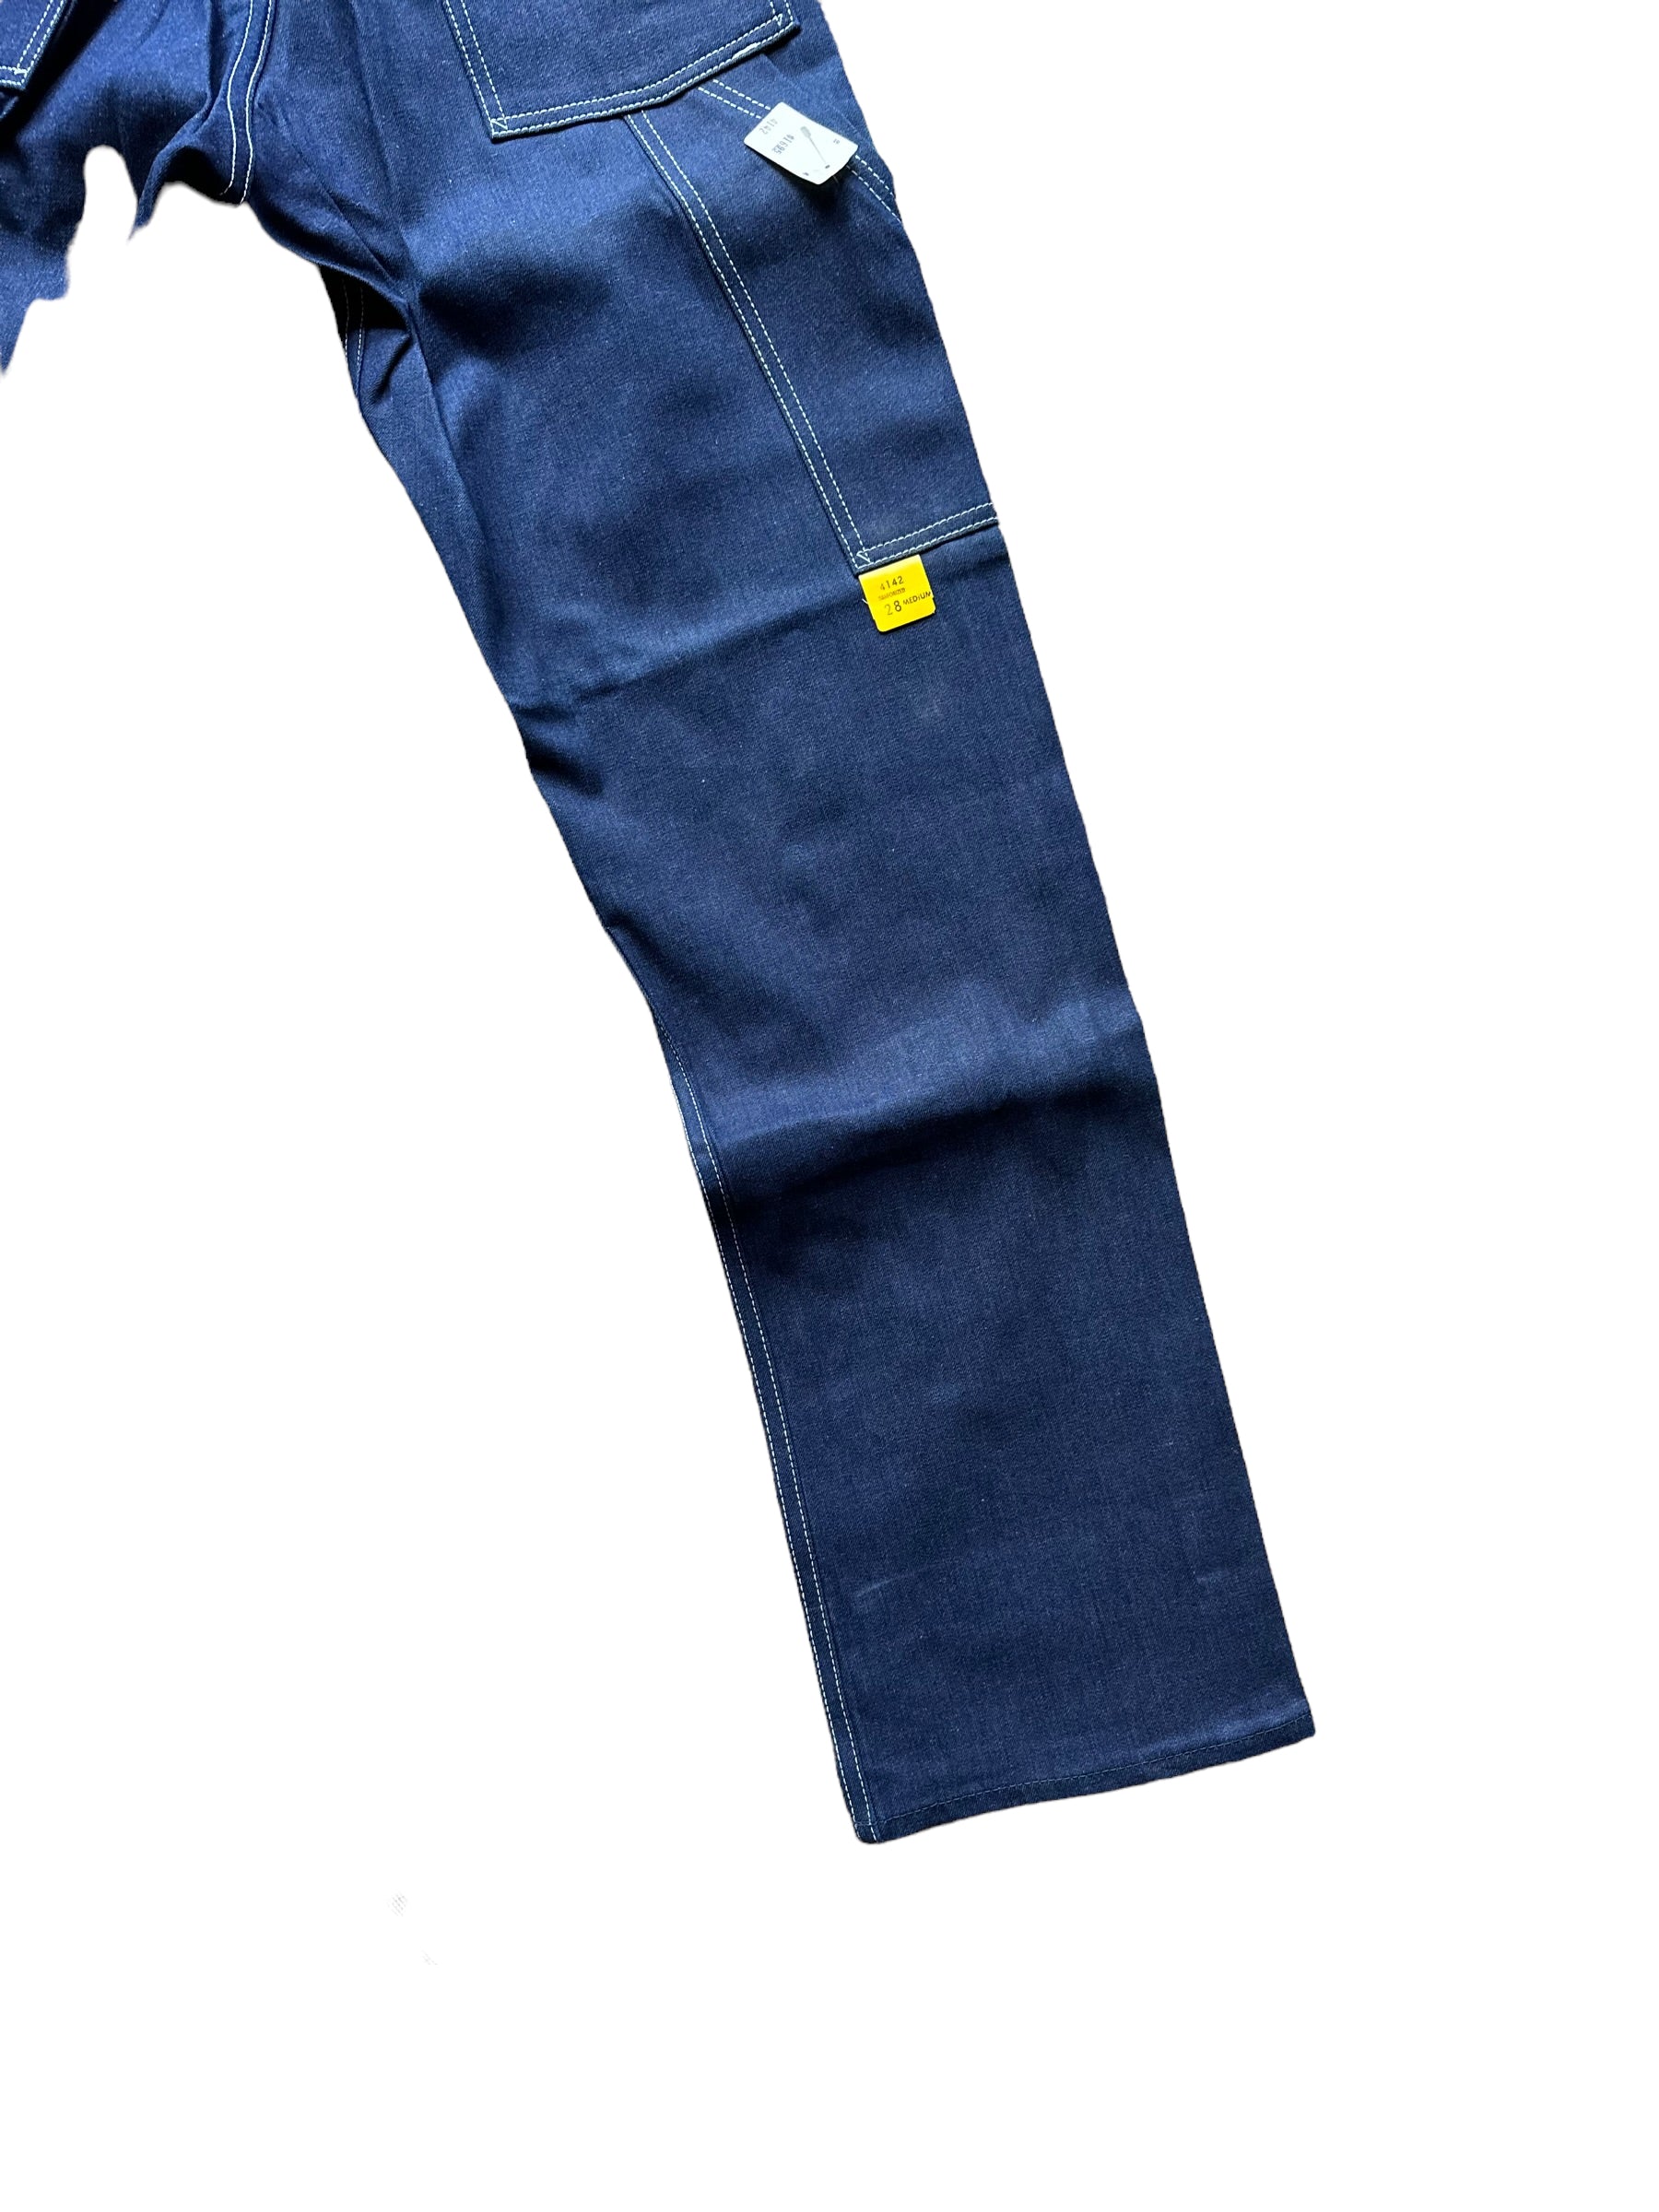 Rear Right Leg View on NOS Vintage Carter's Carpenter Jeans W28 L32 | Barn Owl Vintage Workwear Seattle